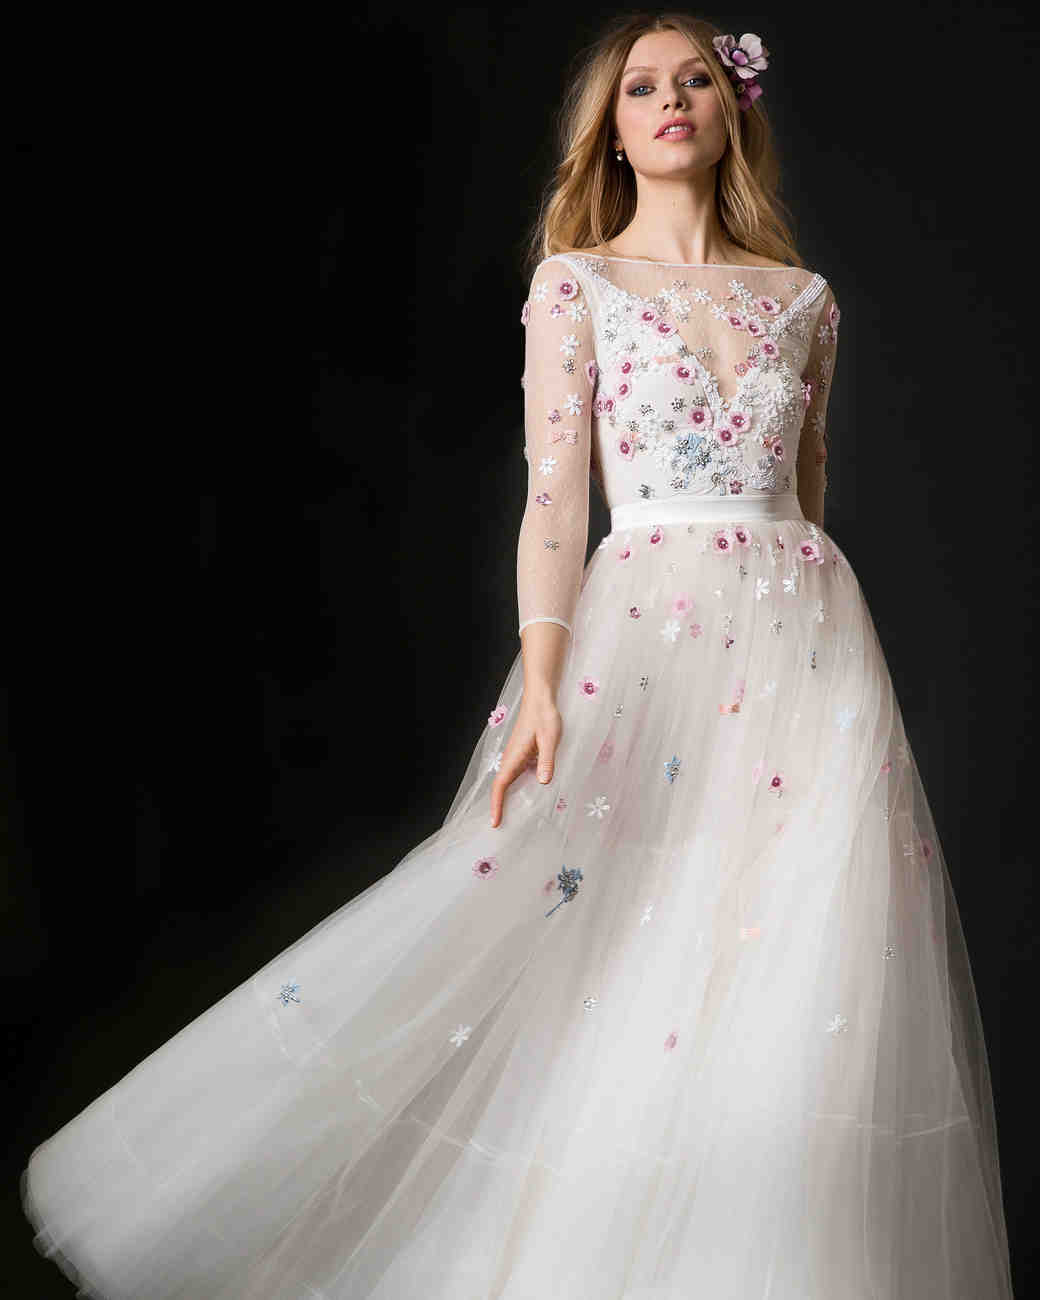 Ultra-Romantic Floral Wedding Dresses | Martha Stewart ...